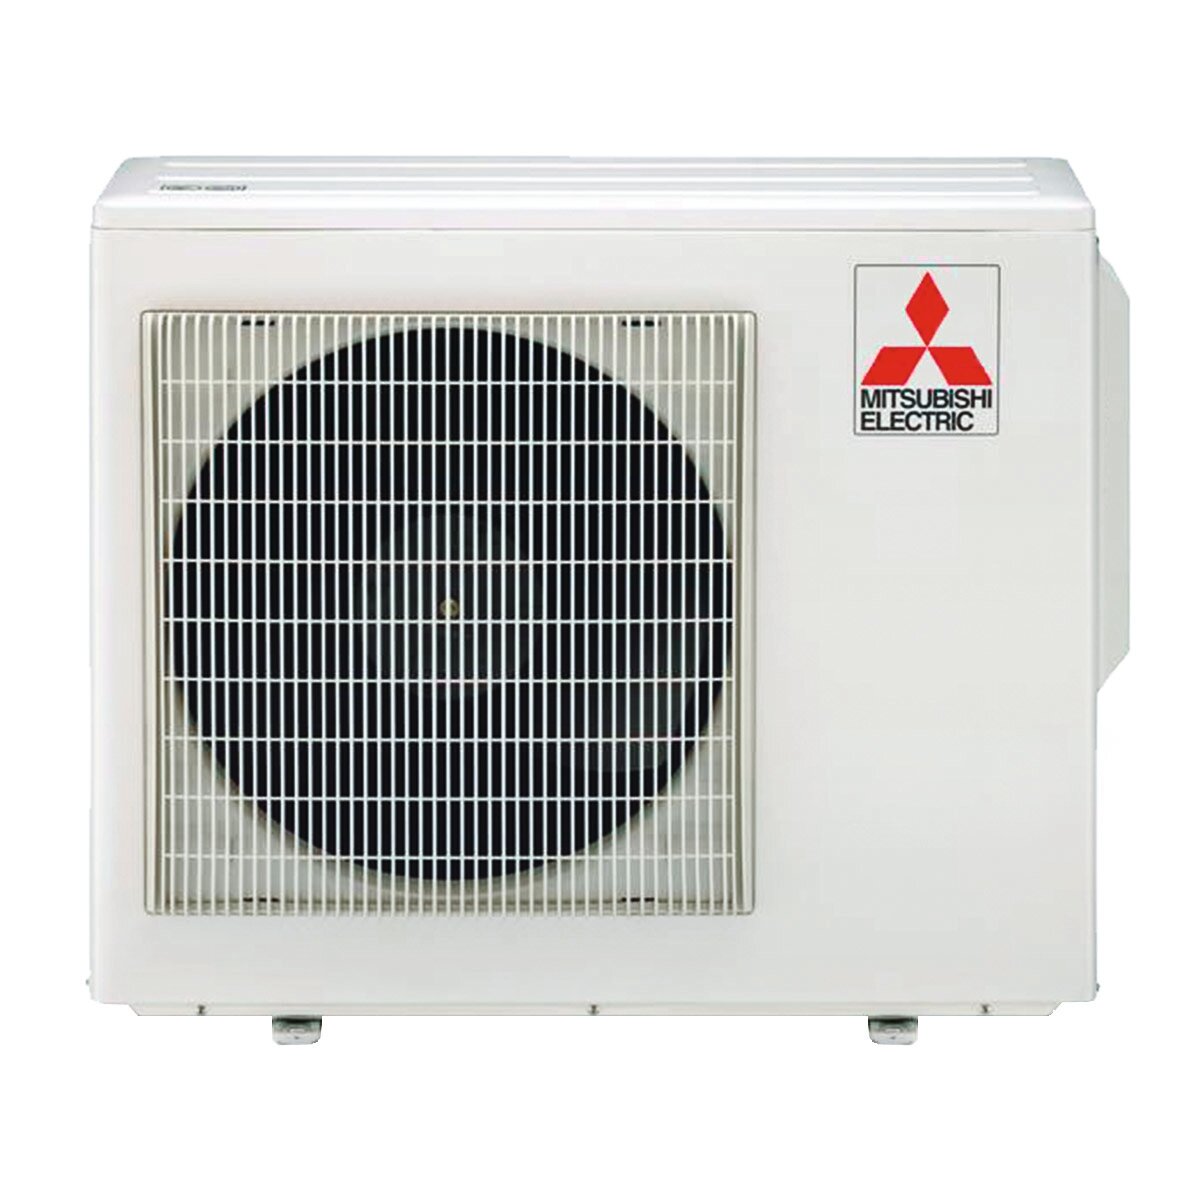 Mitsubishi Electric air conditioner AY Series dual split 12000+12000 BTU inverter A++ wifi outdoor unit 5.4 kW